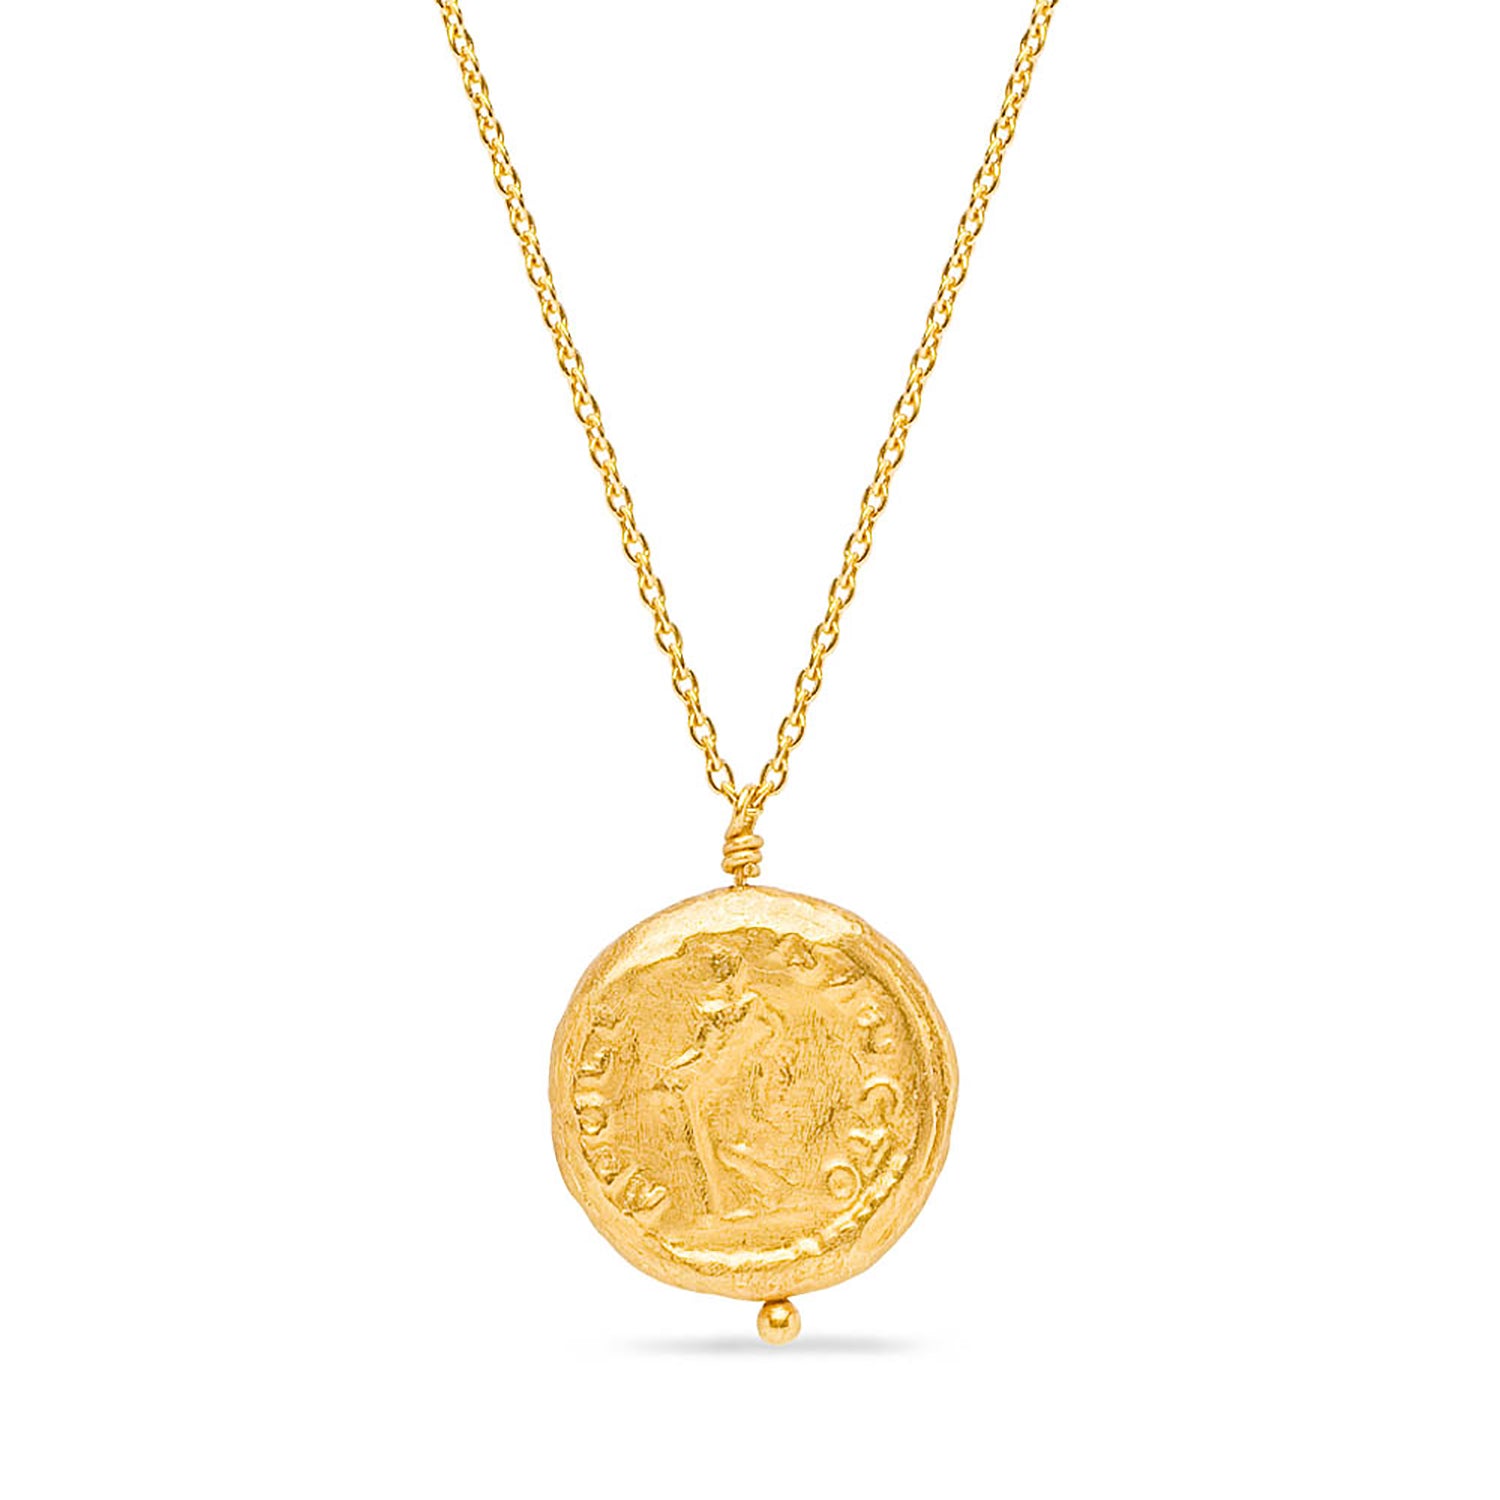 24K GOLD ROMAN FACE COIN NECKLACE – Yossi Harari